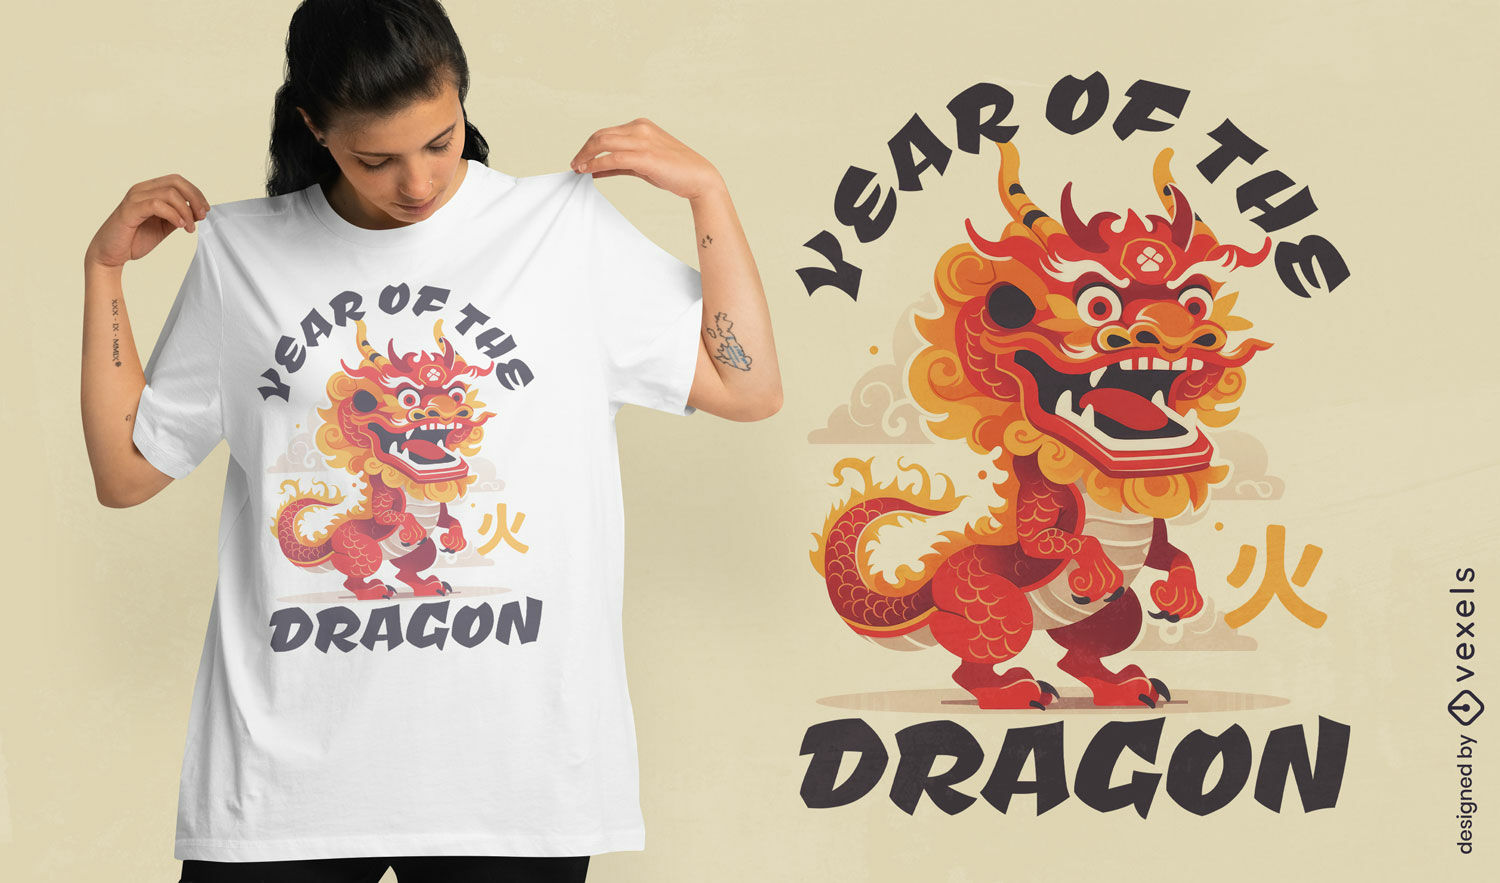 New Year dragon character t-shirt design